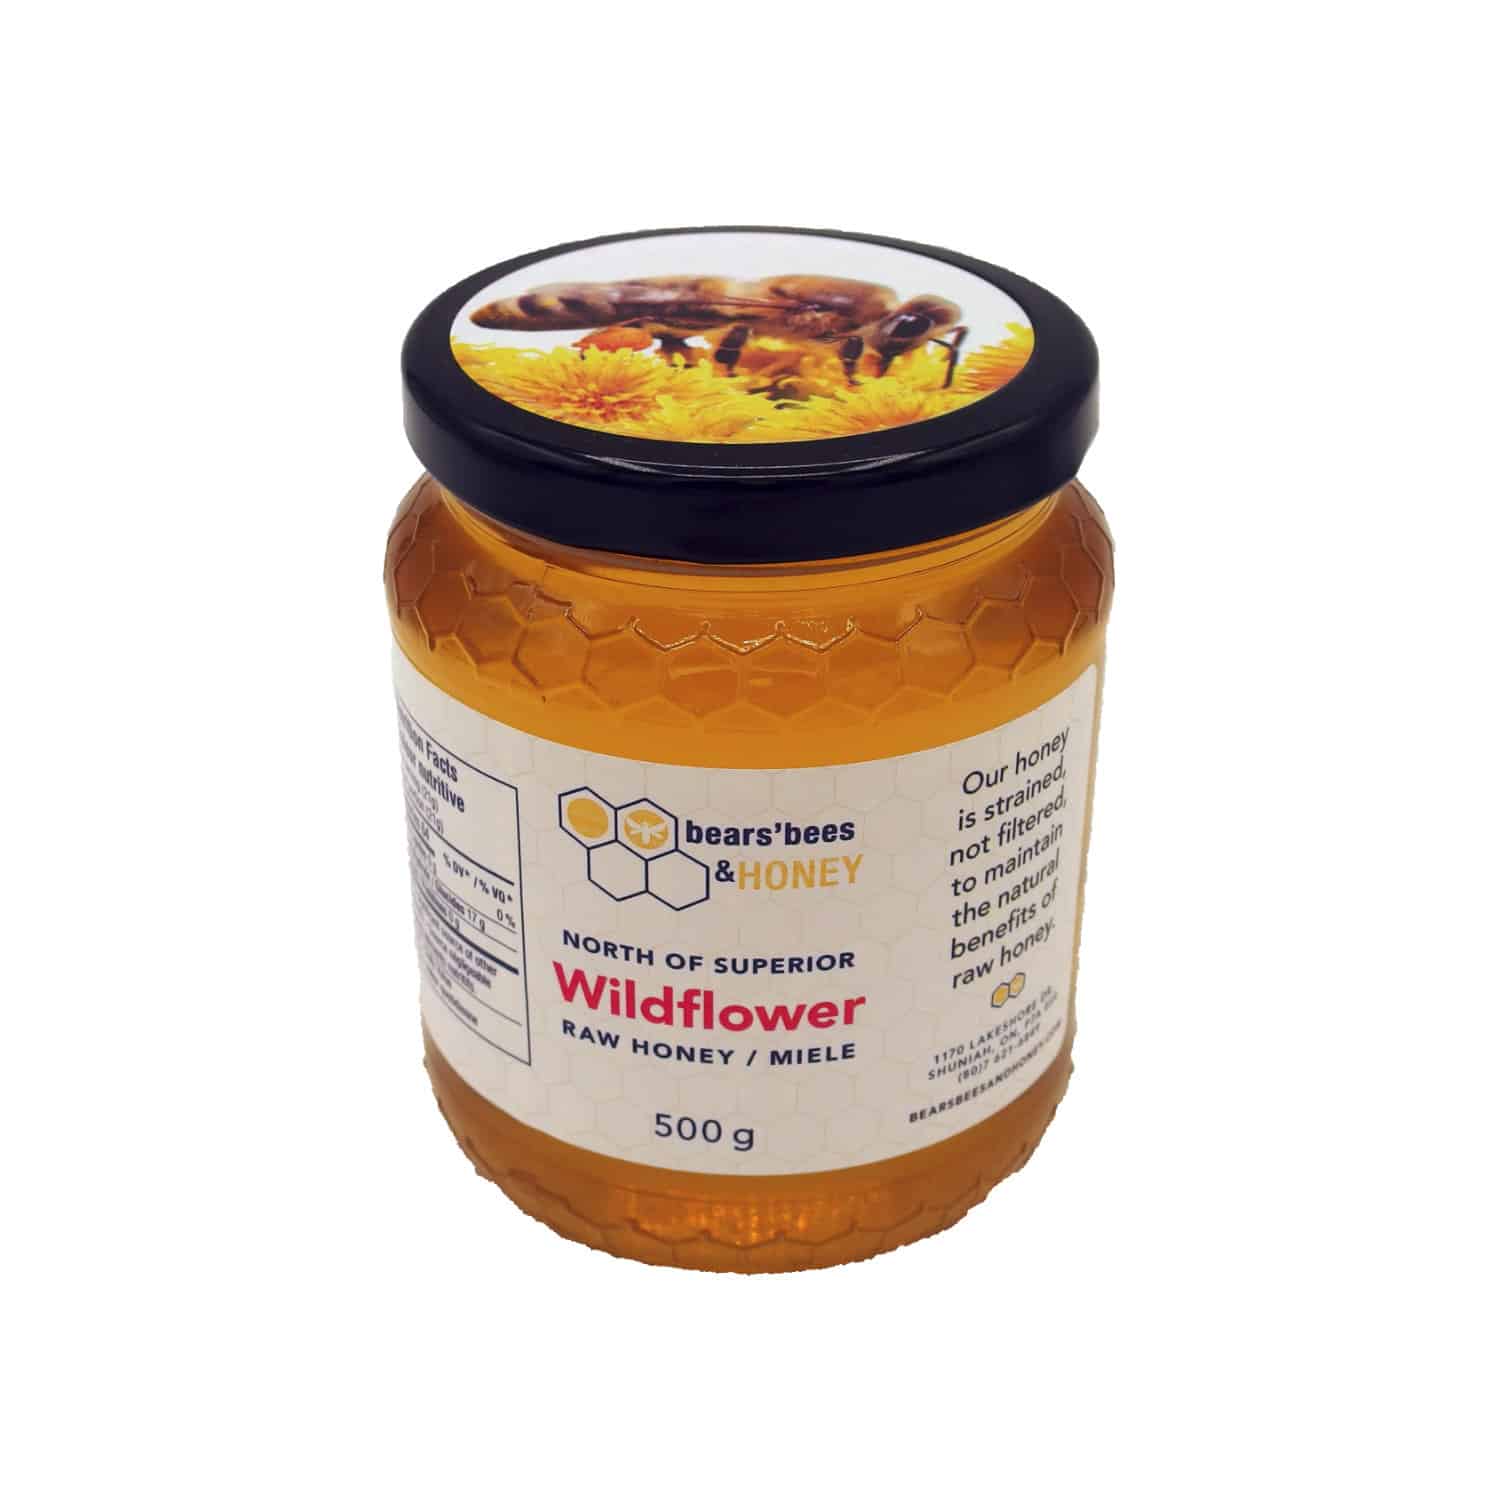 North of Superior Wildflower Raw Honey from Bears' Bees & Honey